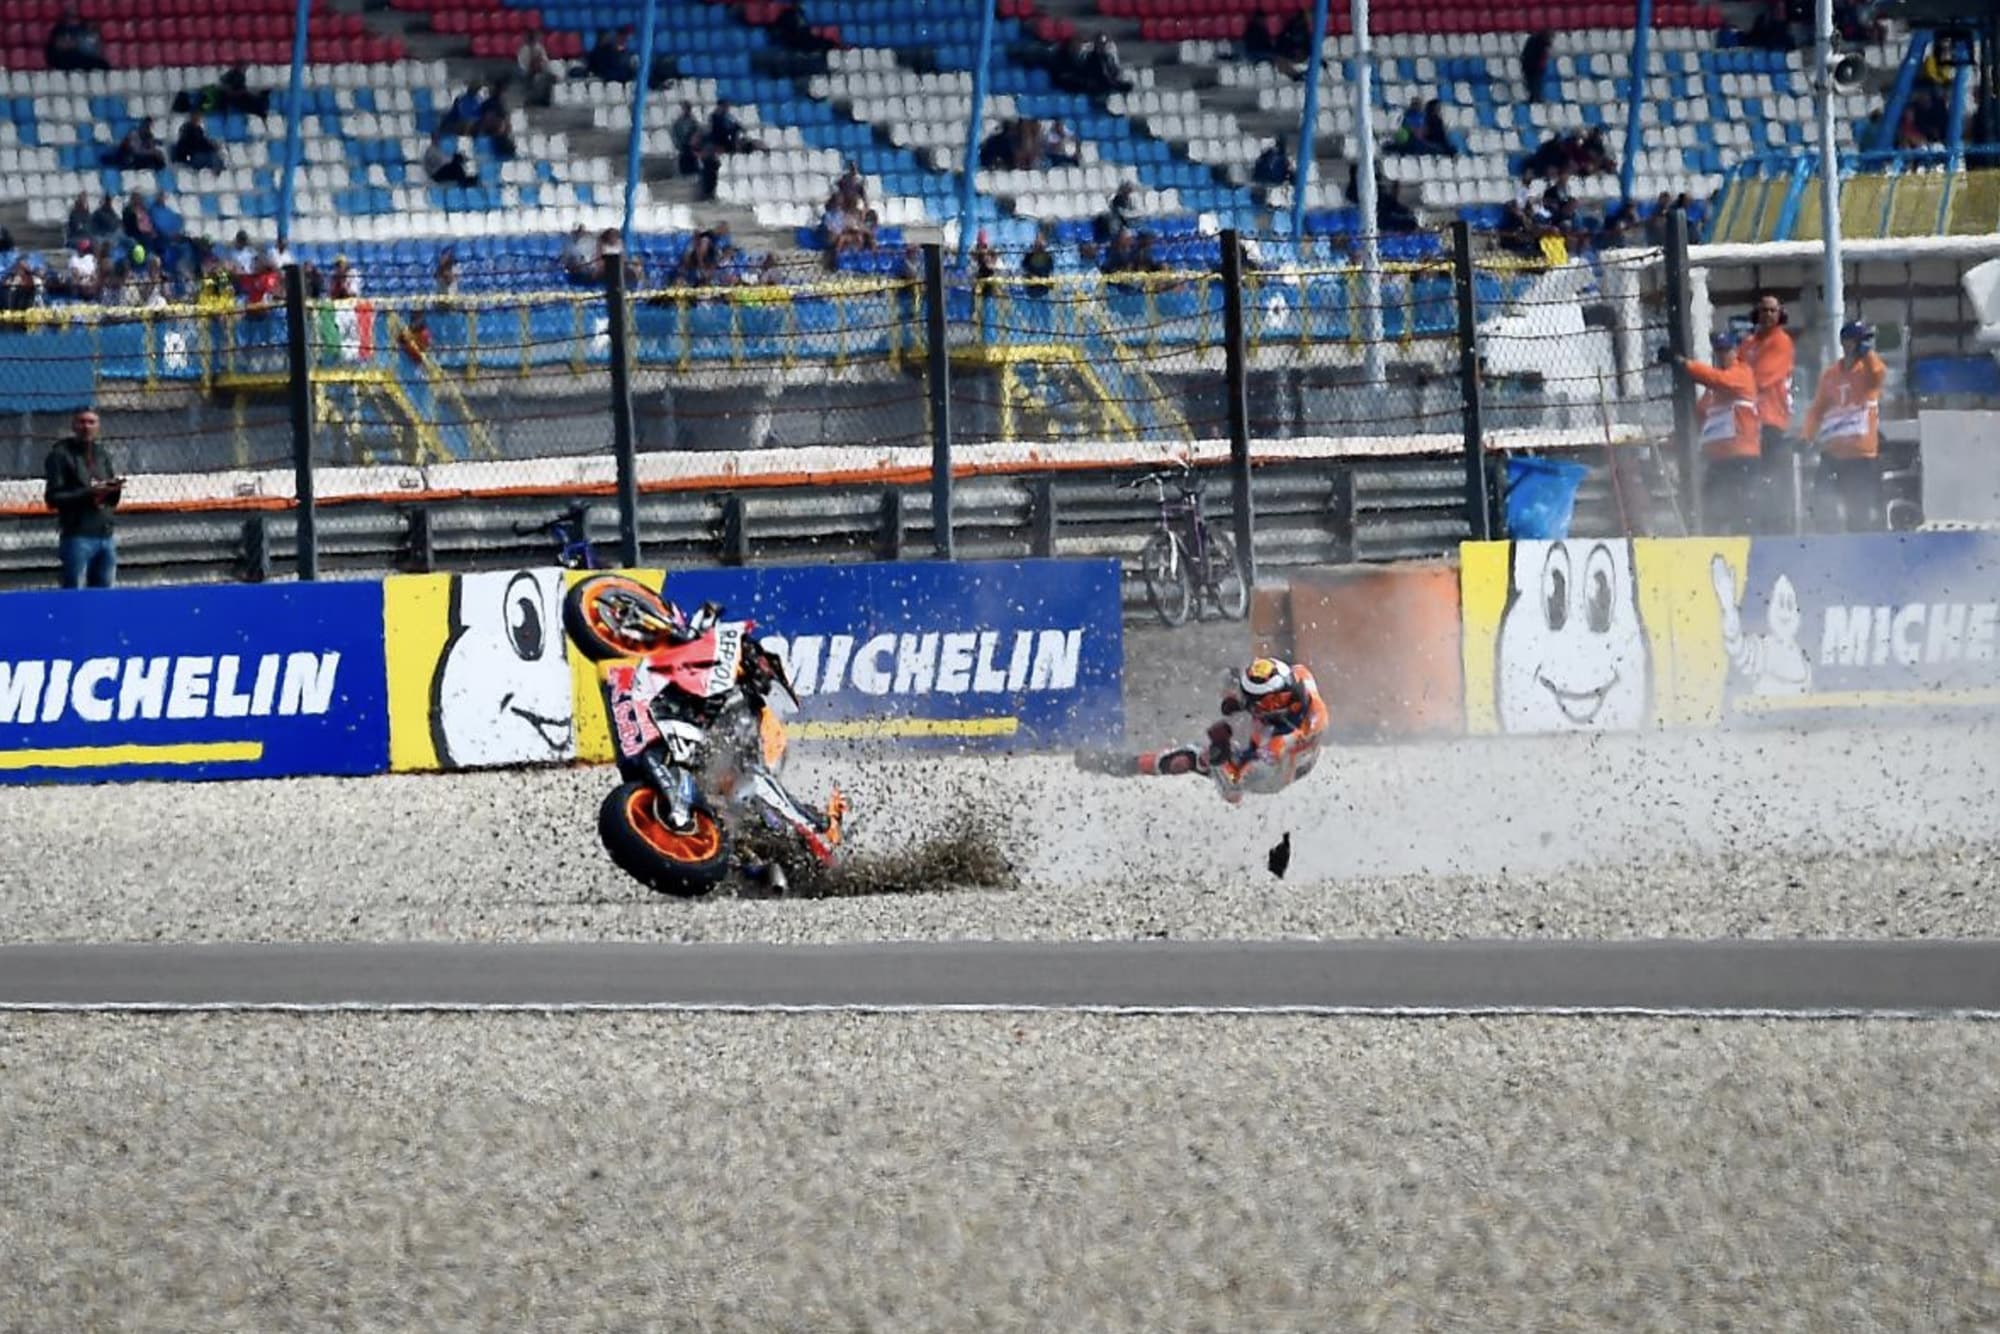 Jorge Lorenzo's crash during the Dutch TT in 2019